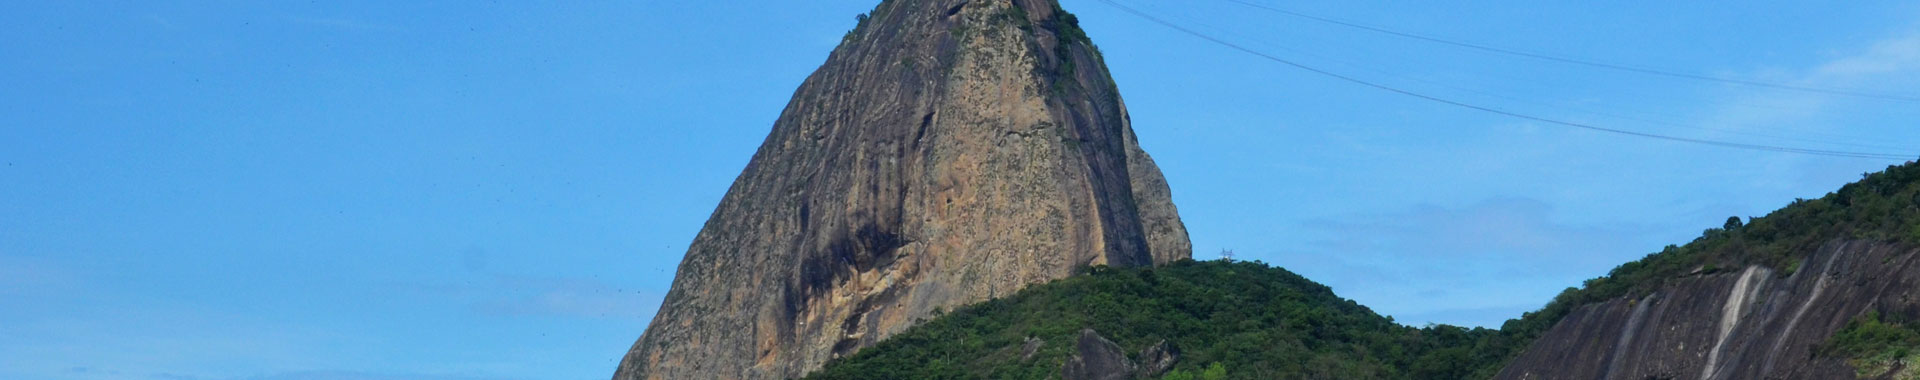 Brasil - Rio - Paseos - Pan Azucar